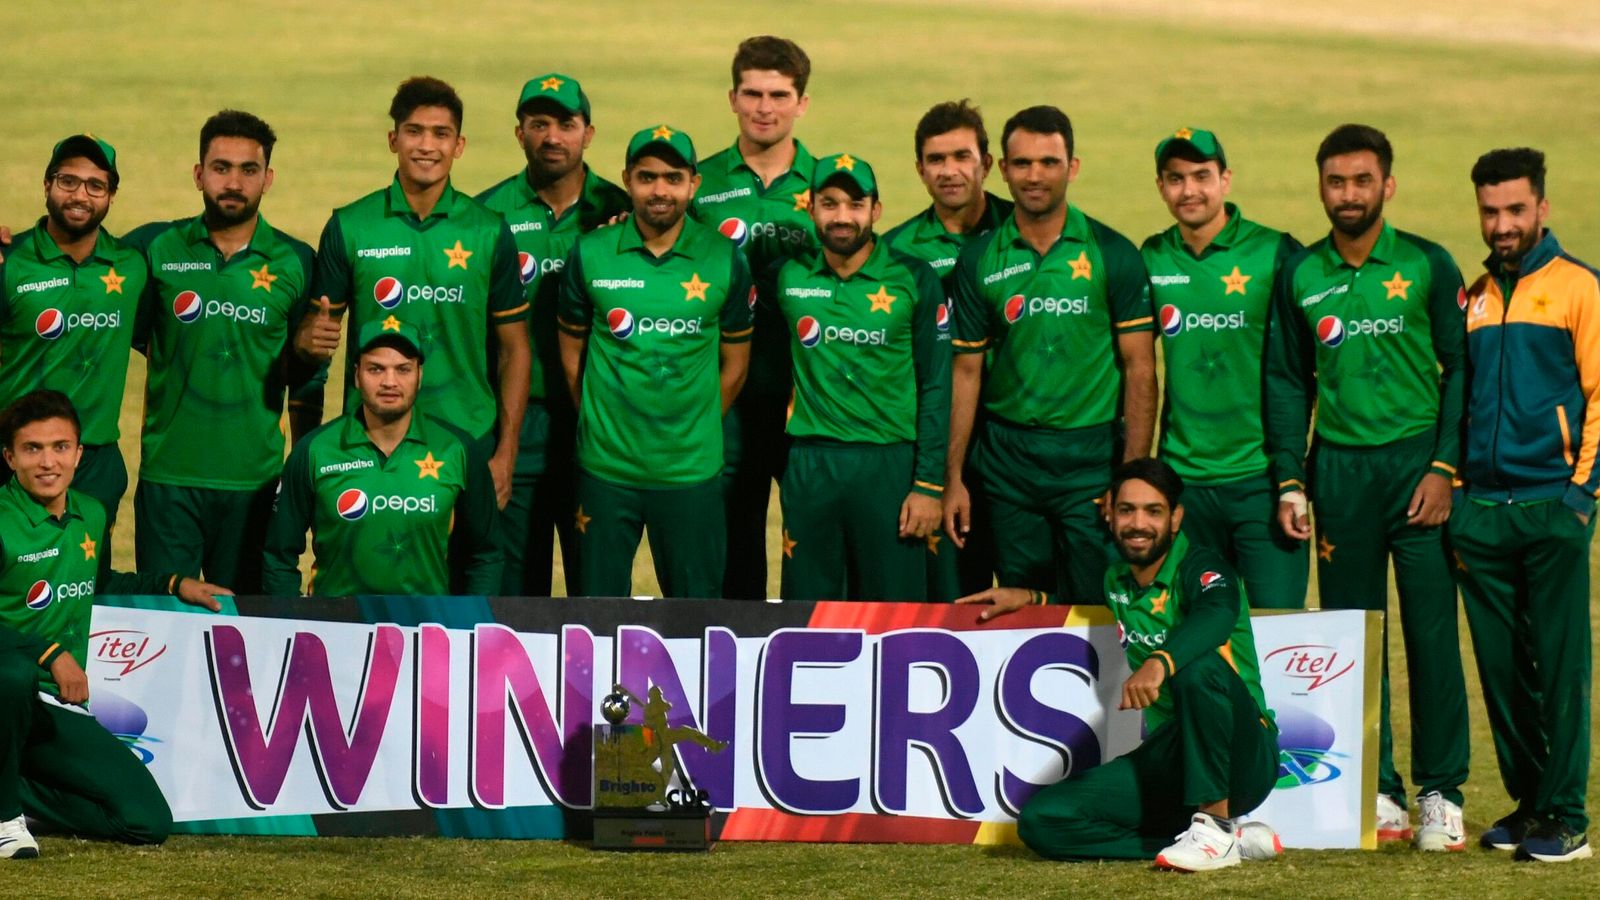 england cricket team last tour of pakistan